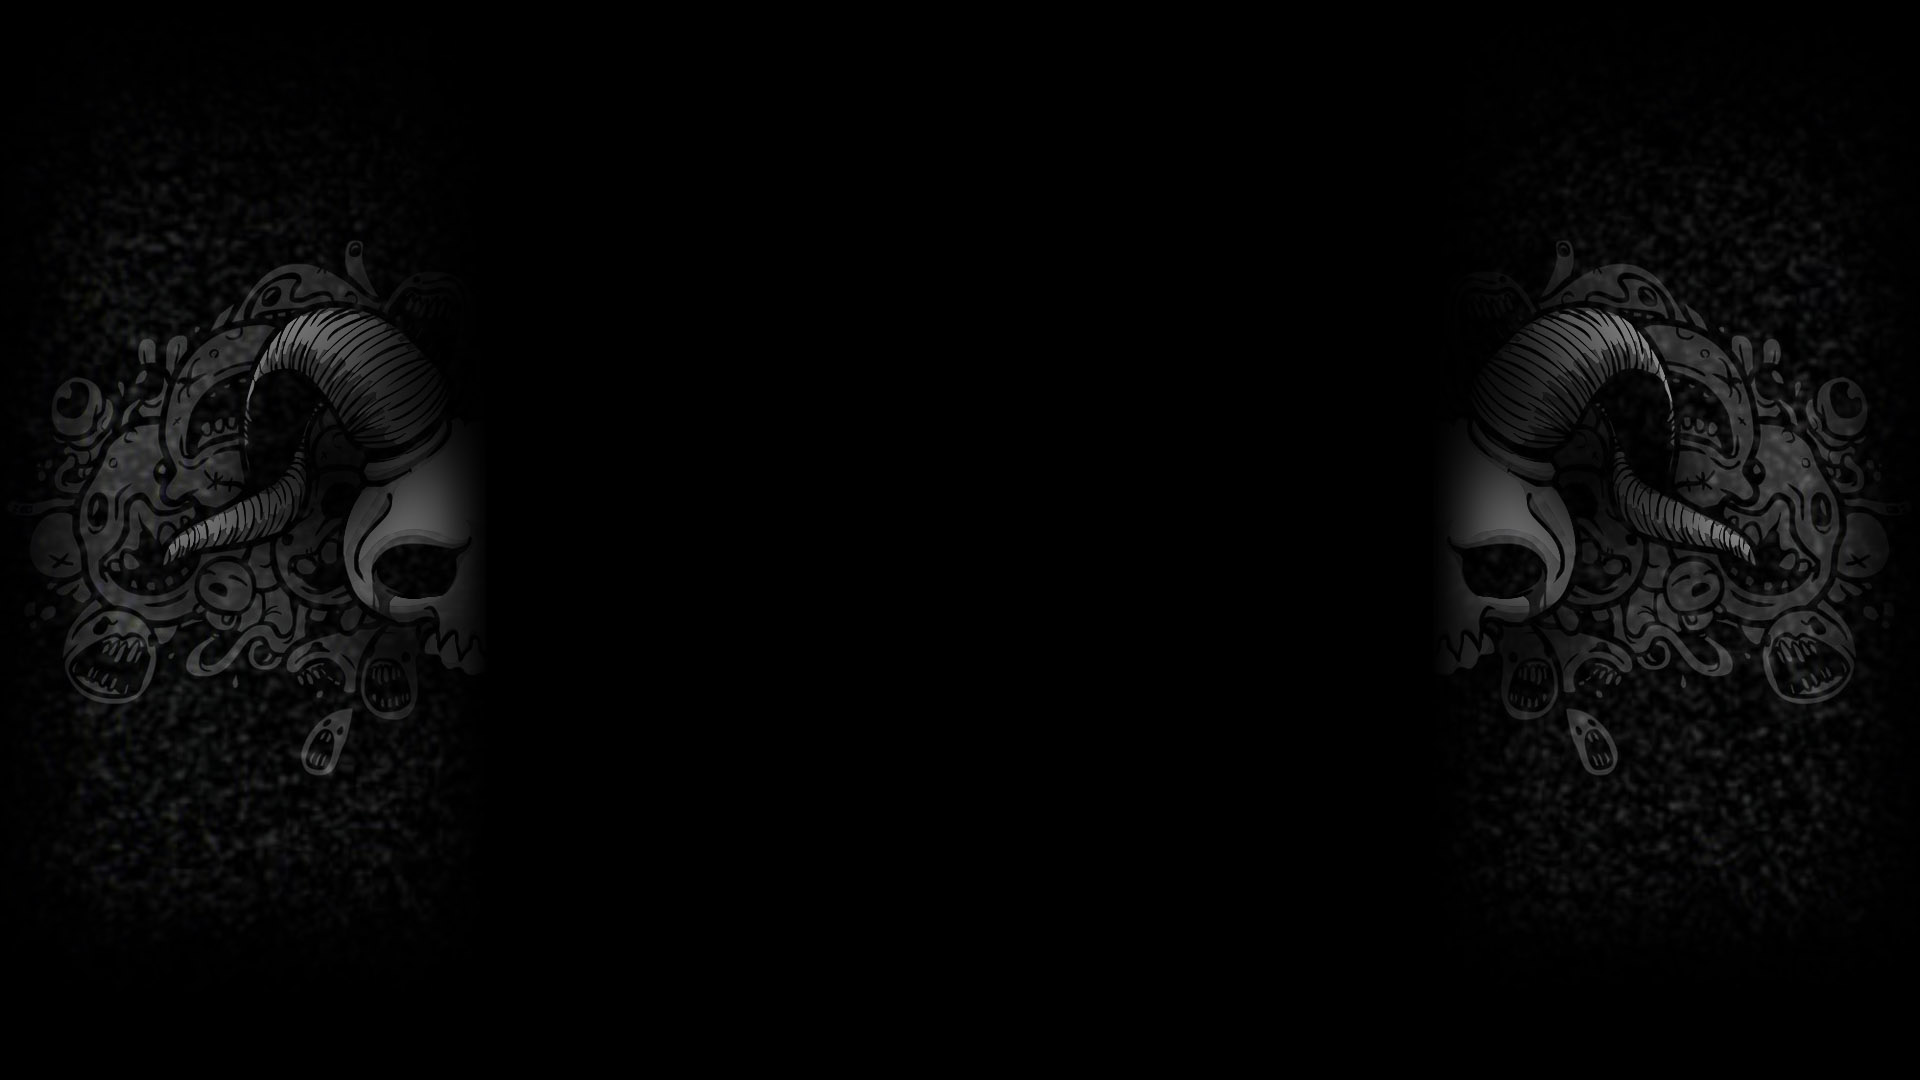 Black Background Simple Minimalism Digital Art Skull Horns Artwork Spooky Dark Monochrome Split View 1920x1080